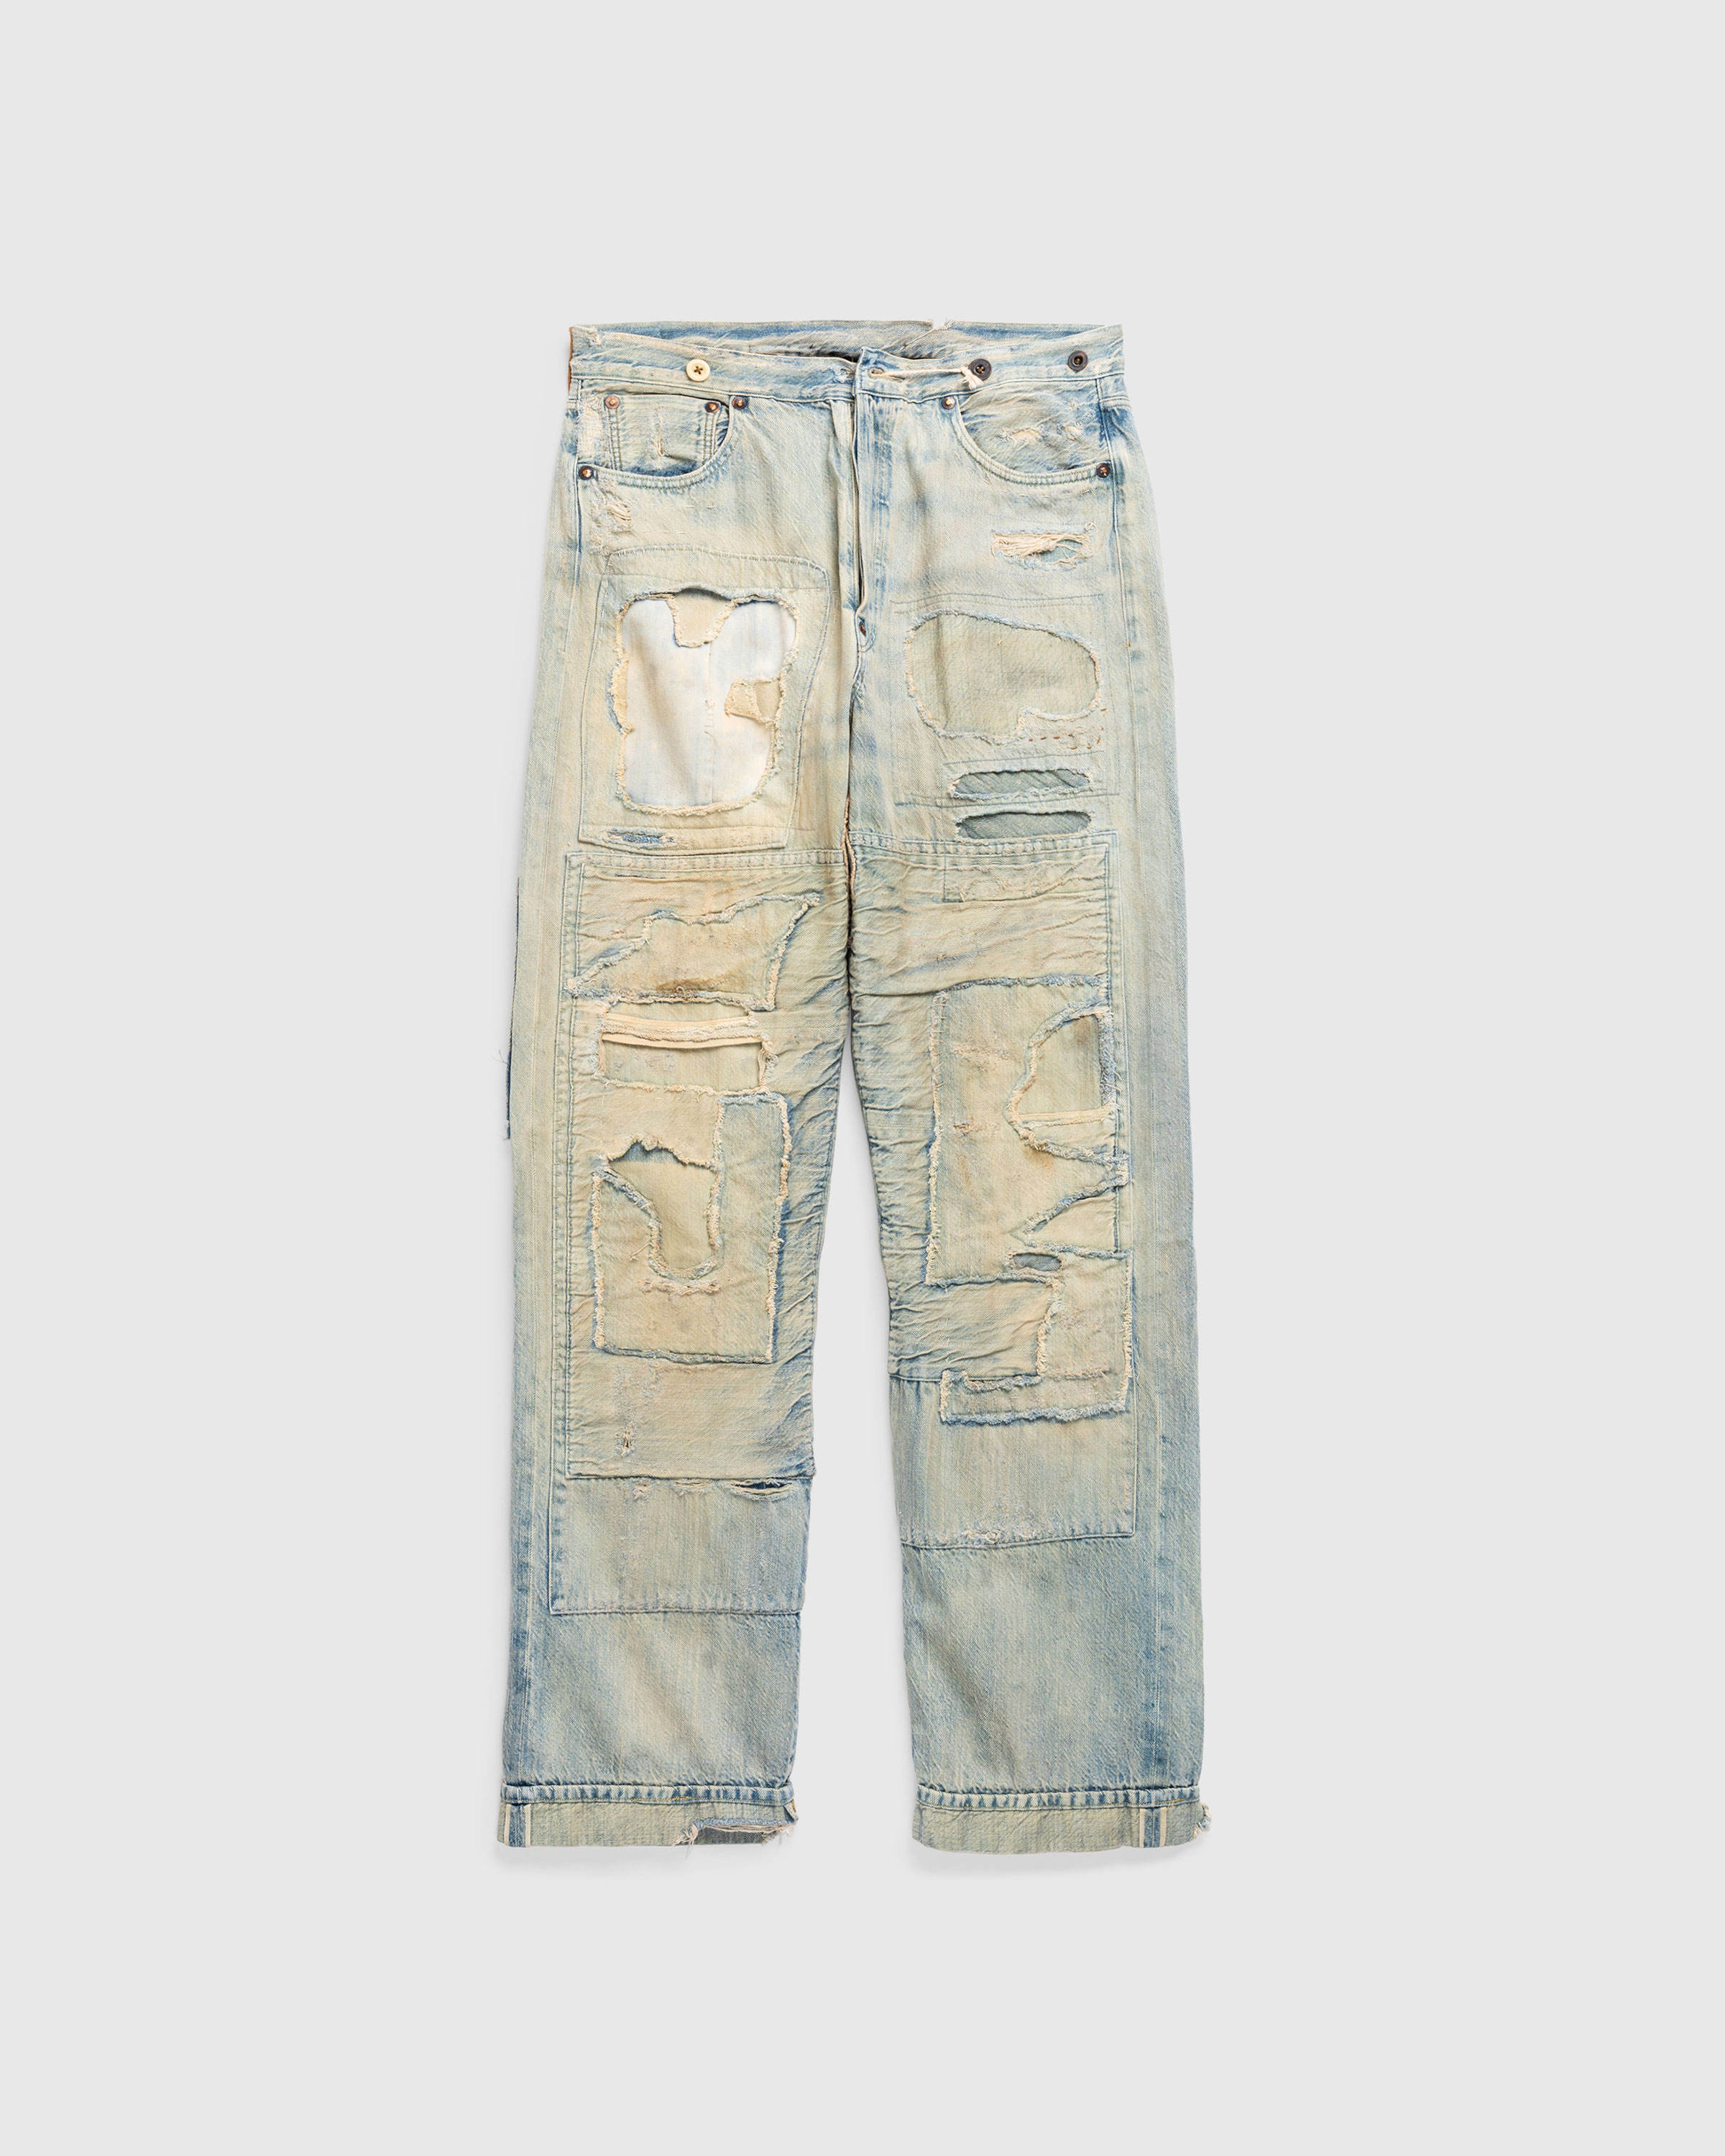 Levi's – 1917 Homer Campbell 501 Jeans Medium Indigo - Denim - Blue - Image 1